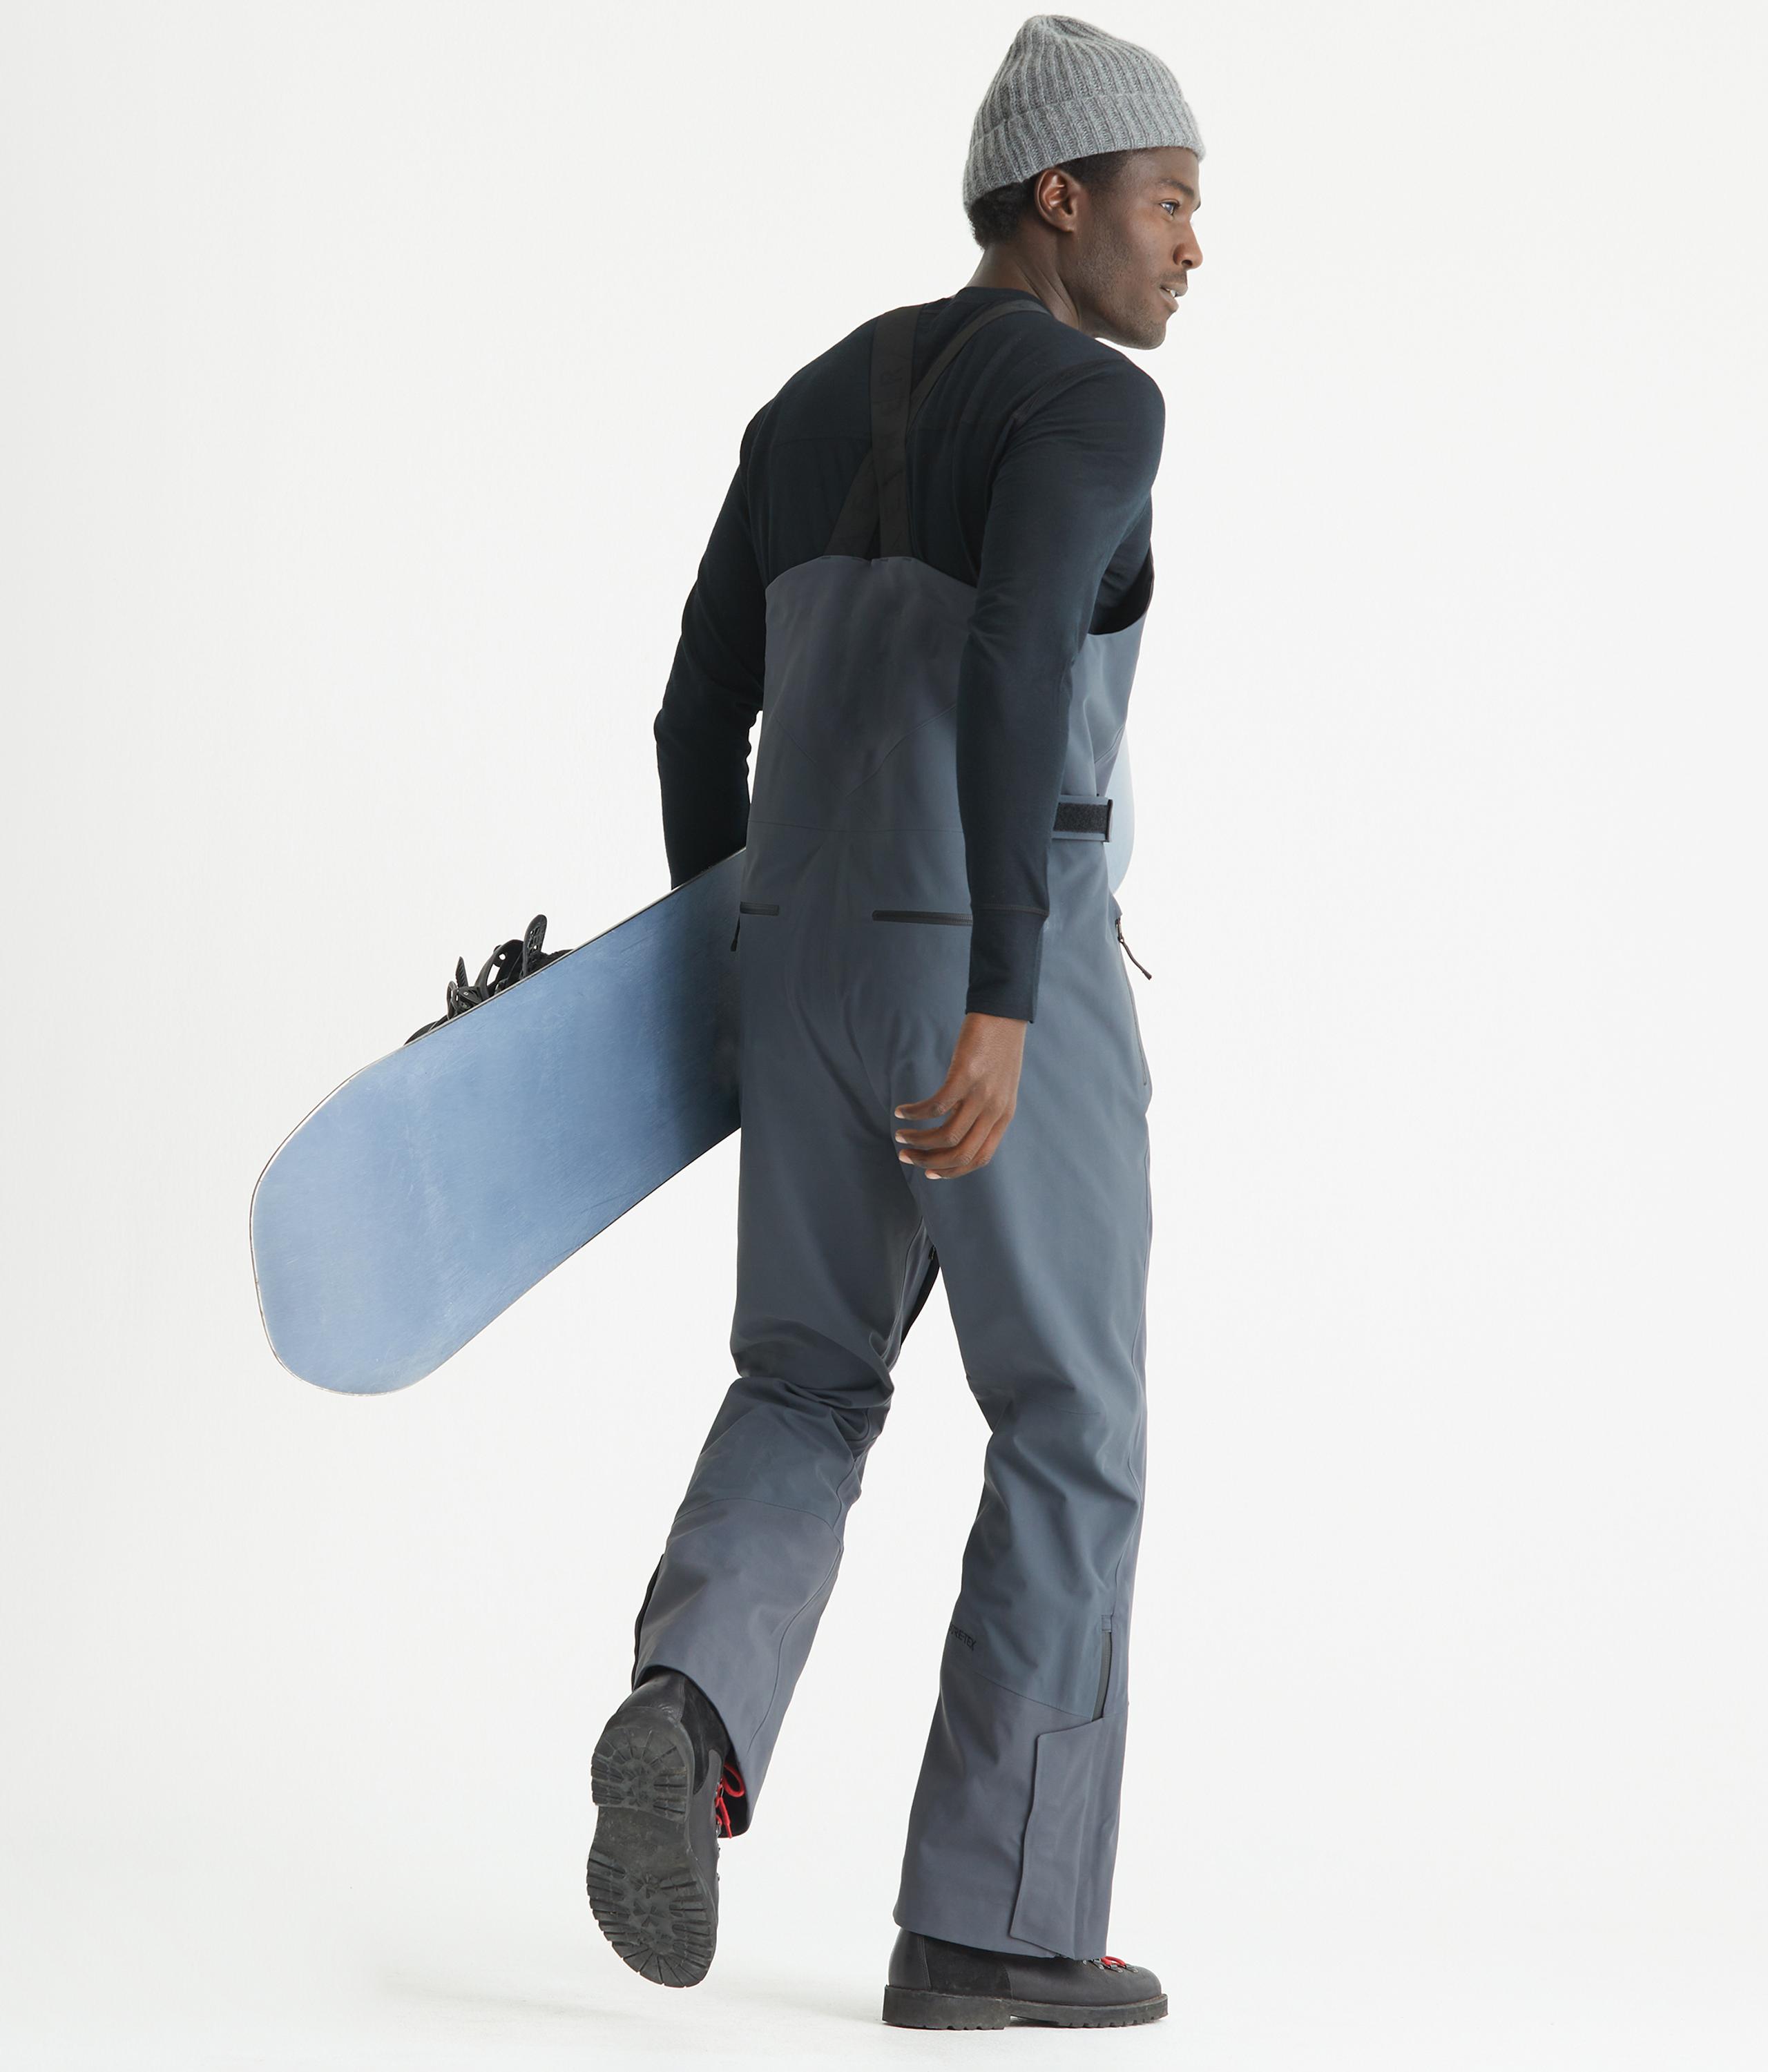 Man wearing Stealth Snow Bib holding snowboard in studio